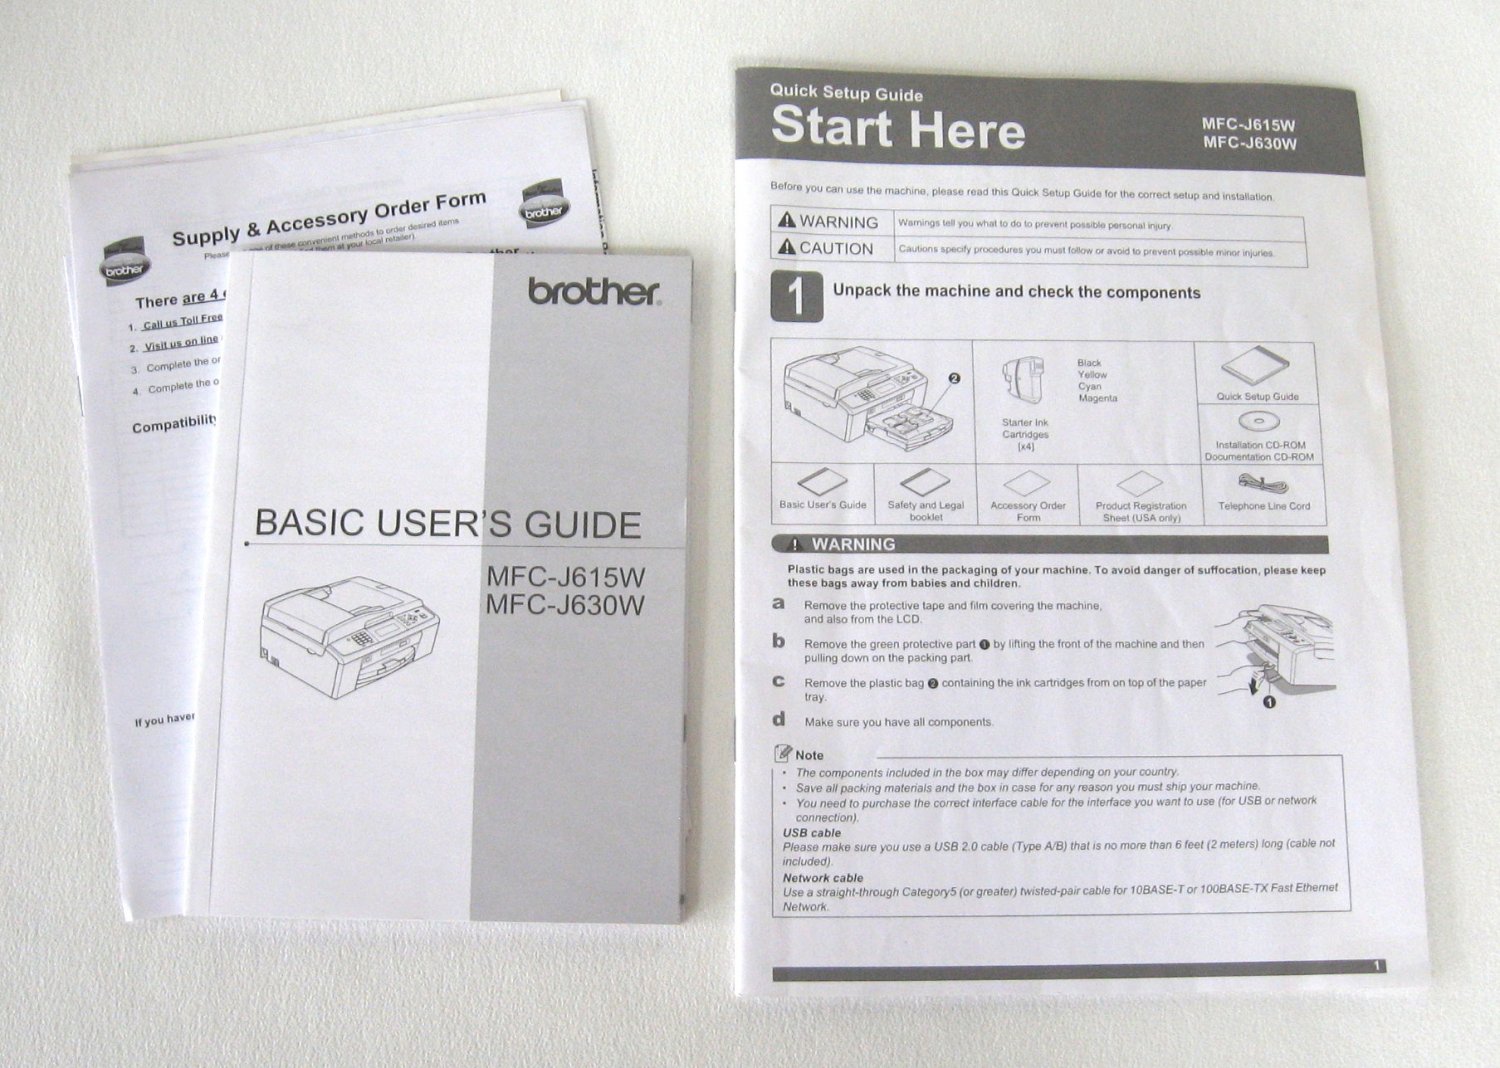 Brother Printer Quick Setup Guide Manual Books CD's MFC-J615W MFC-J630W